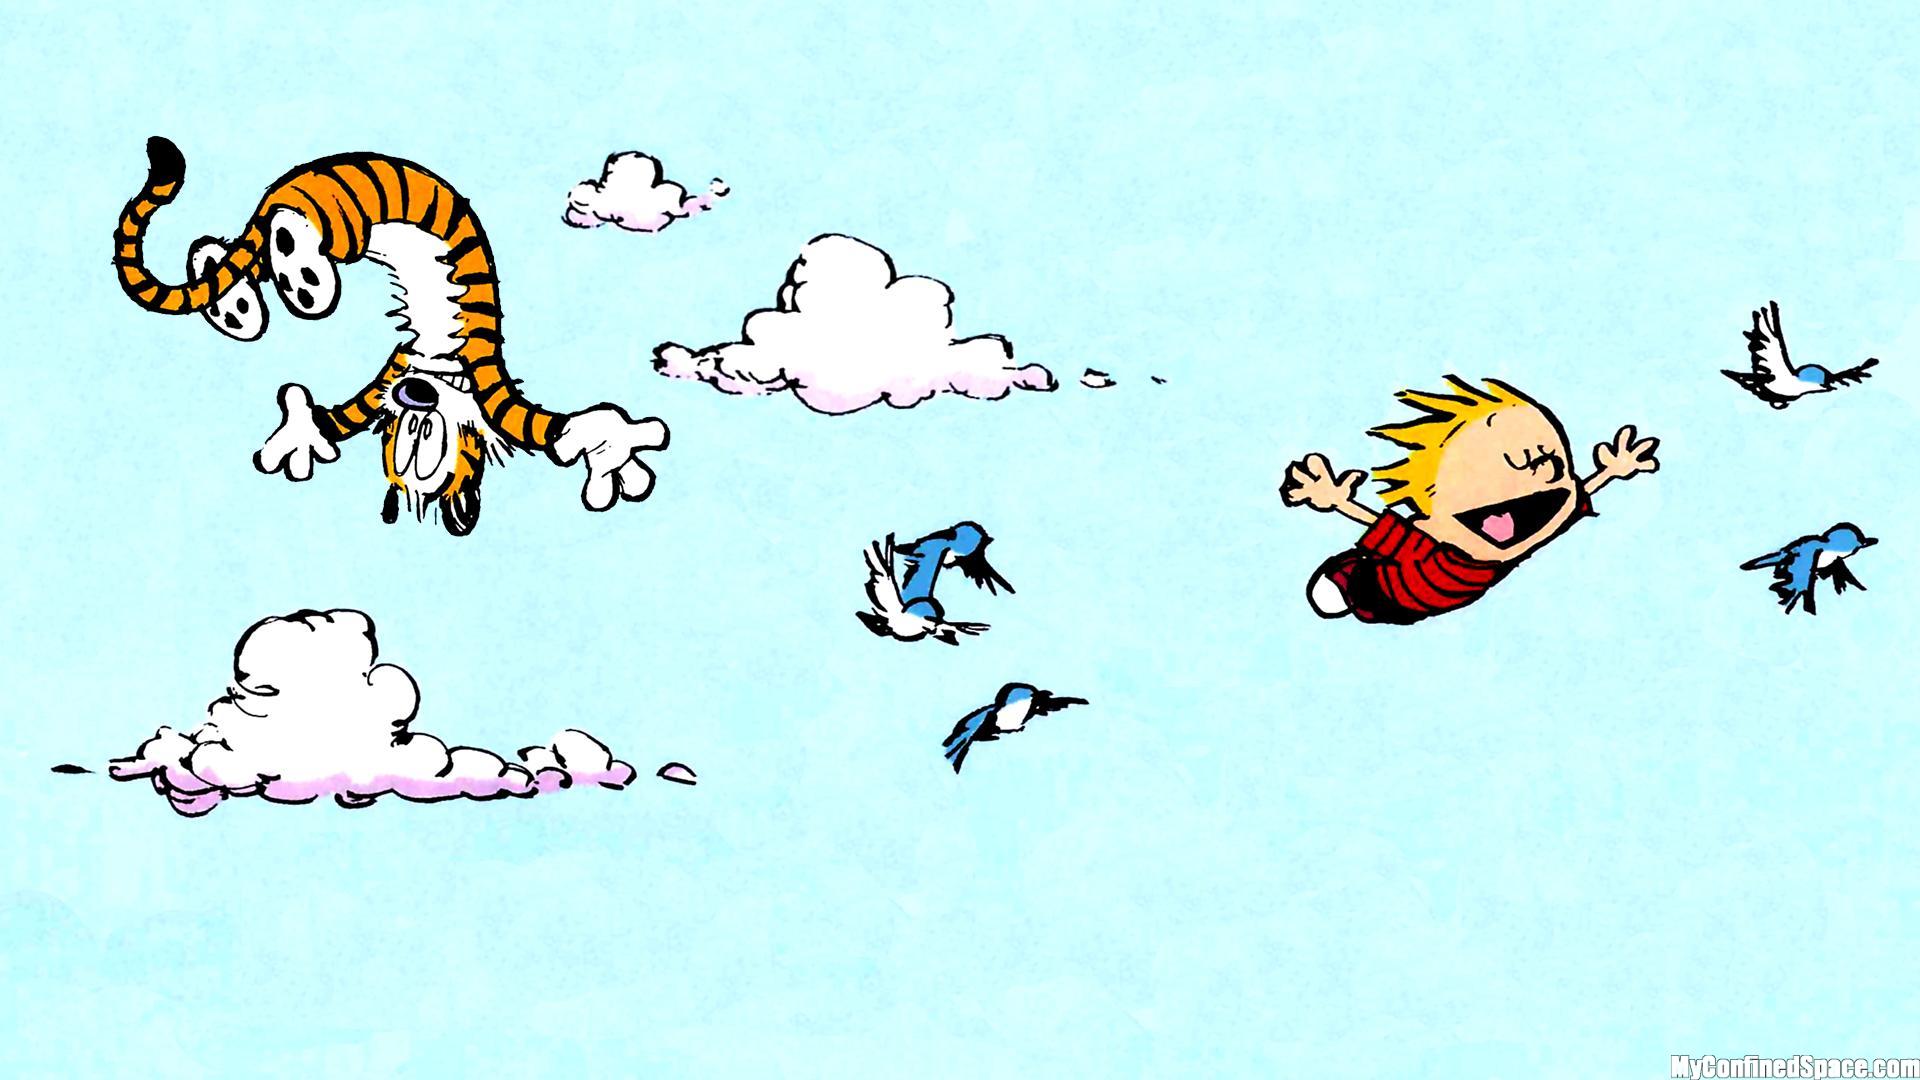 Calvin and hobbes comics j wallpaper 1920x1080 162357